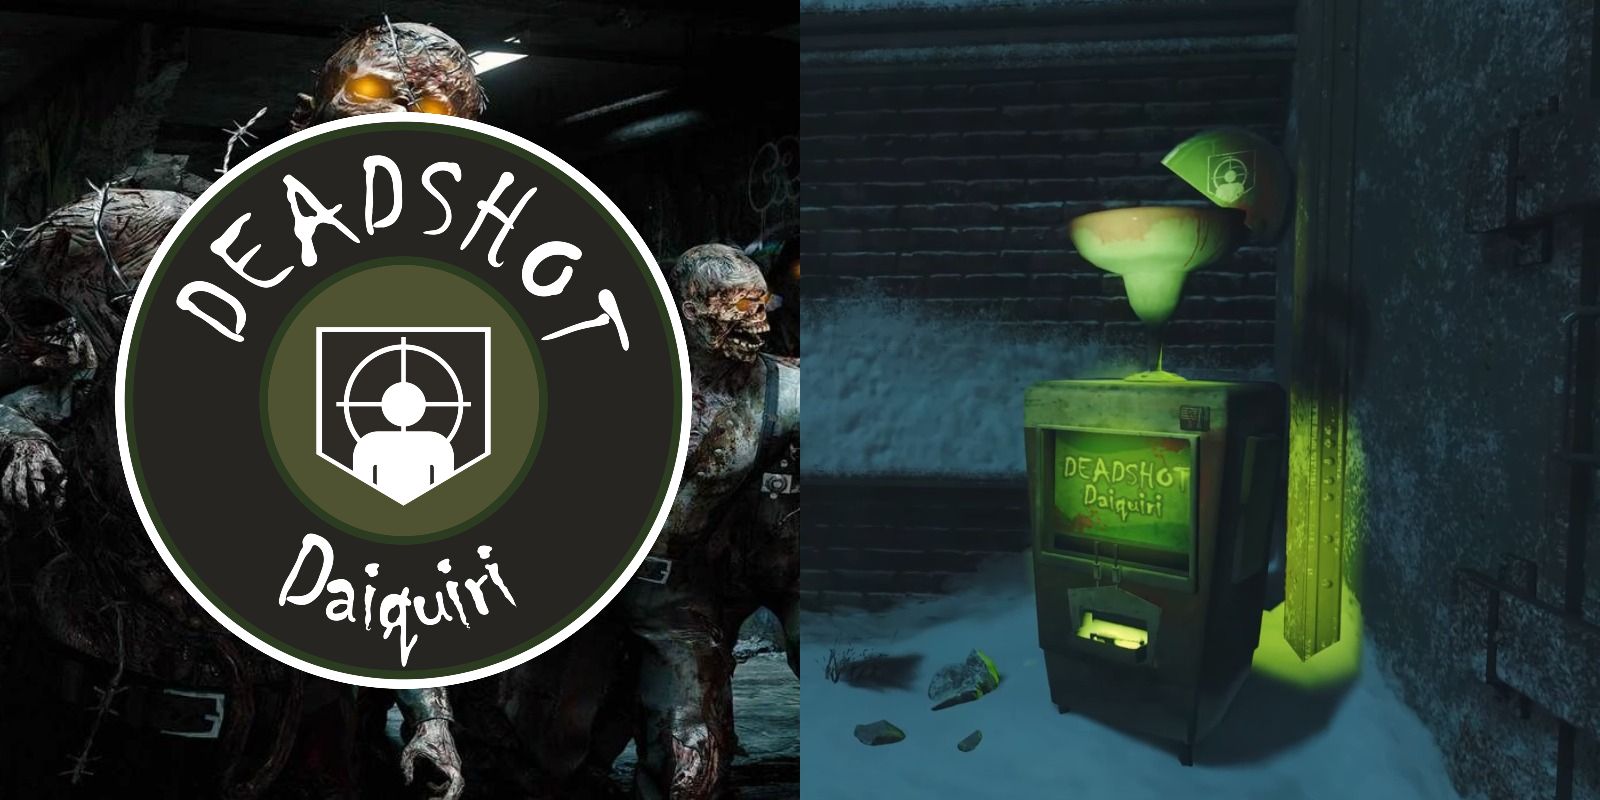 Deadshot Daiquiri soda machine and logo in Call Of Duty franchise